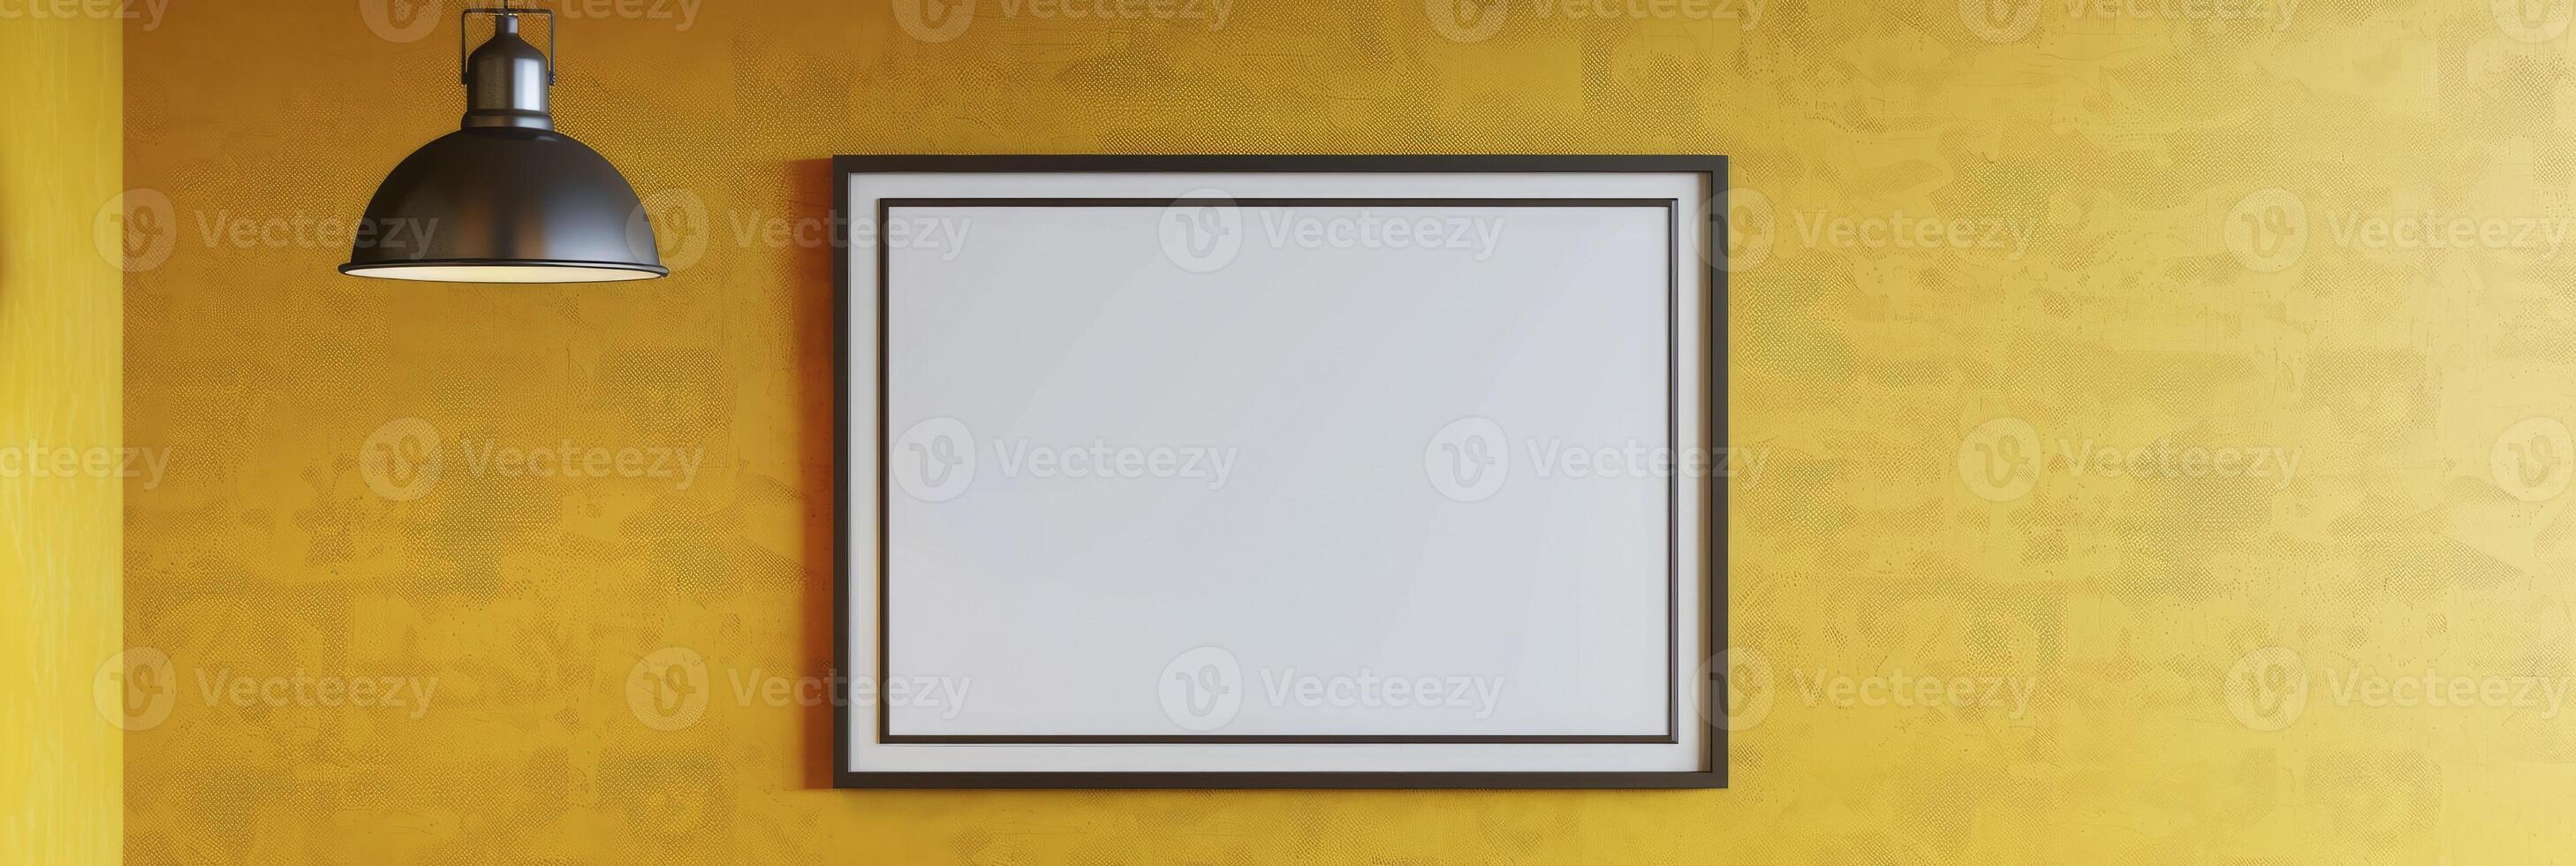 ai generado galería inspiración, blanco imagen marco en vibrante amarillo pared con colgando lámpara. Perfecto foto marco o póster modelo Bosquejo